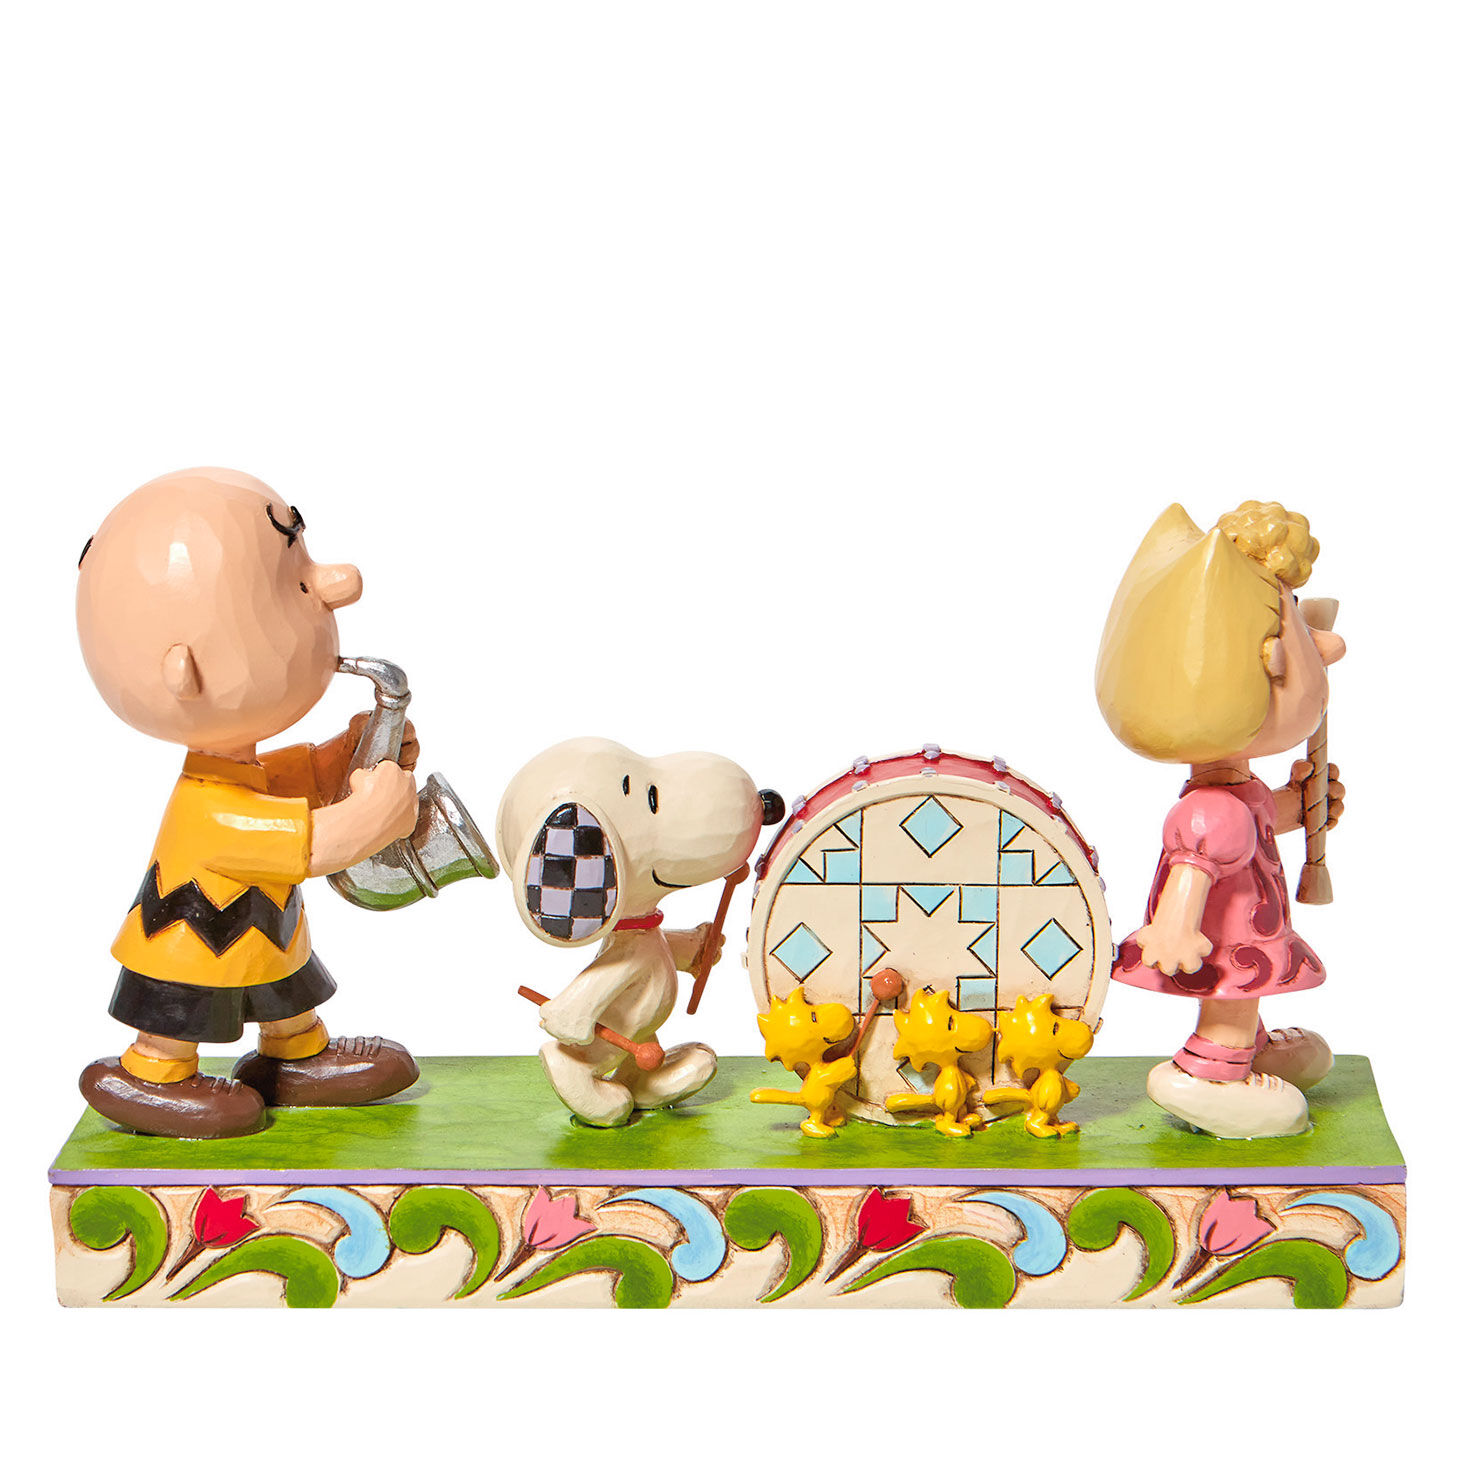 Jim Shore Peanuts Marching Band Figurine, 4.625